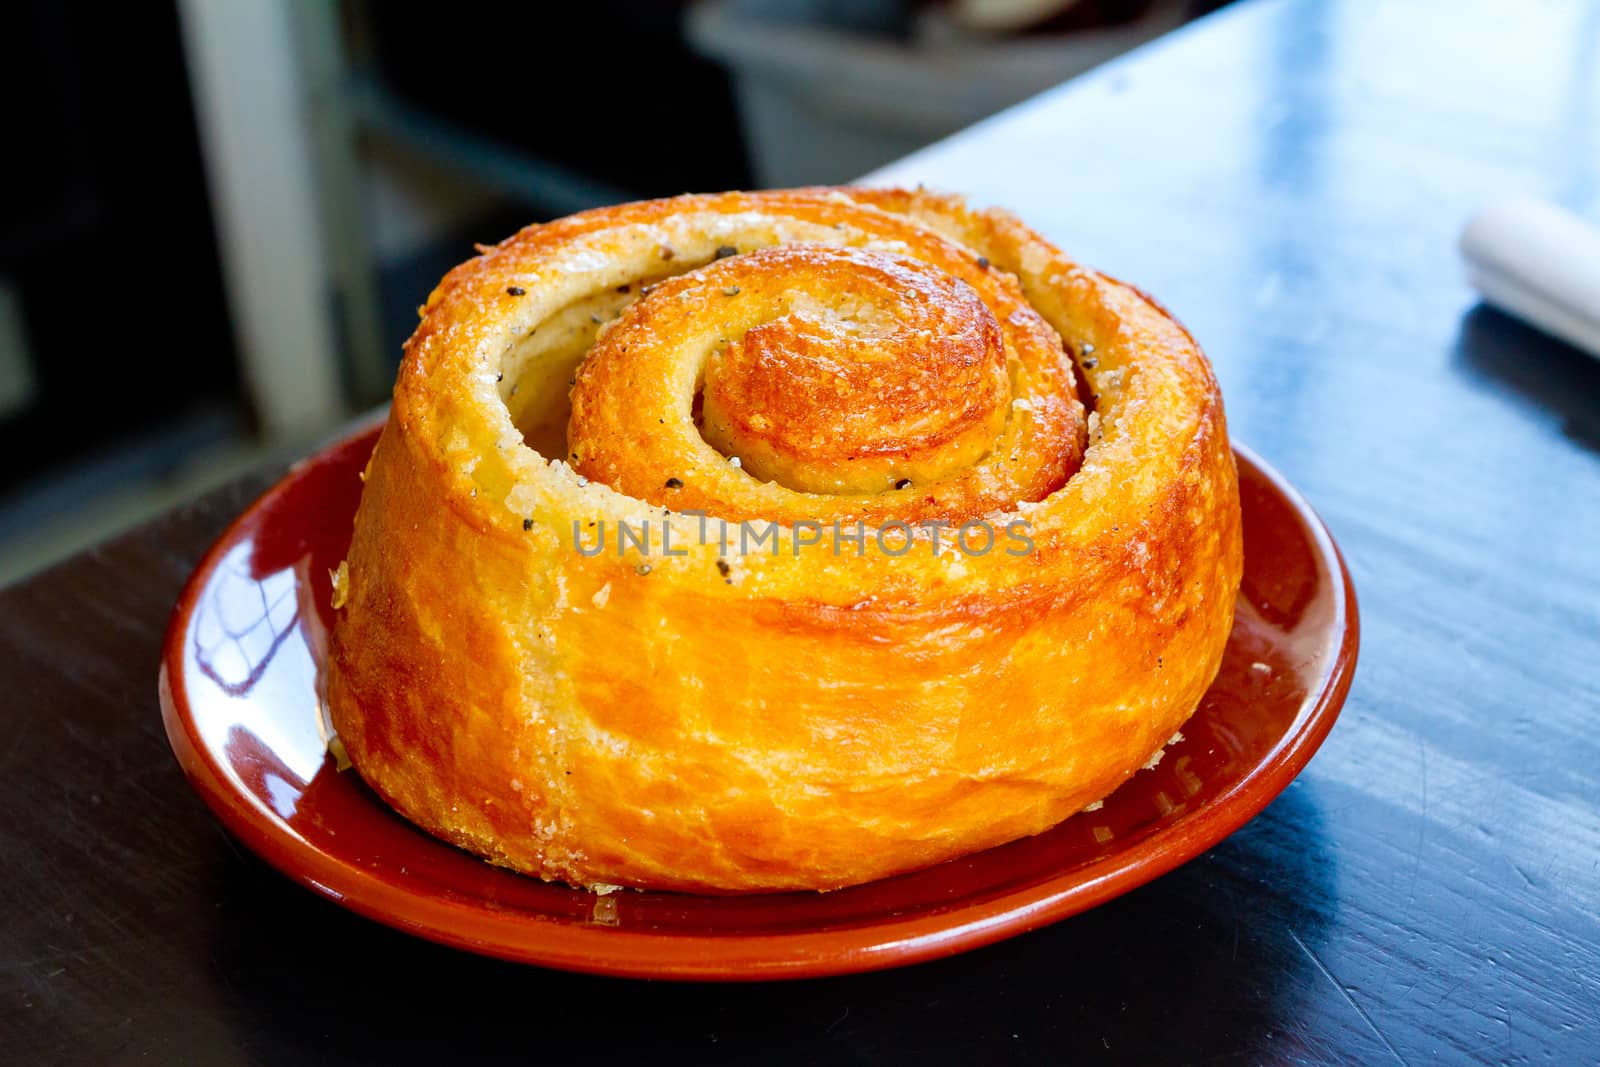 A morning bun cinnamon roll on a plate at a cafe restaurant.